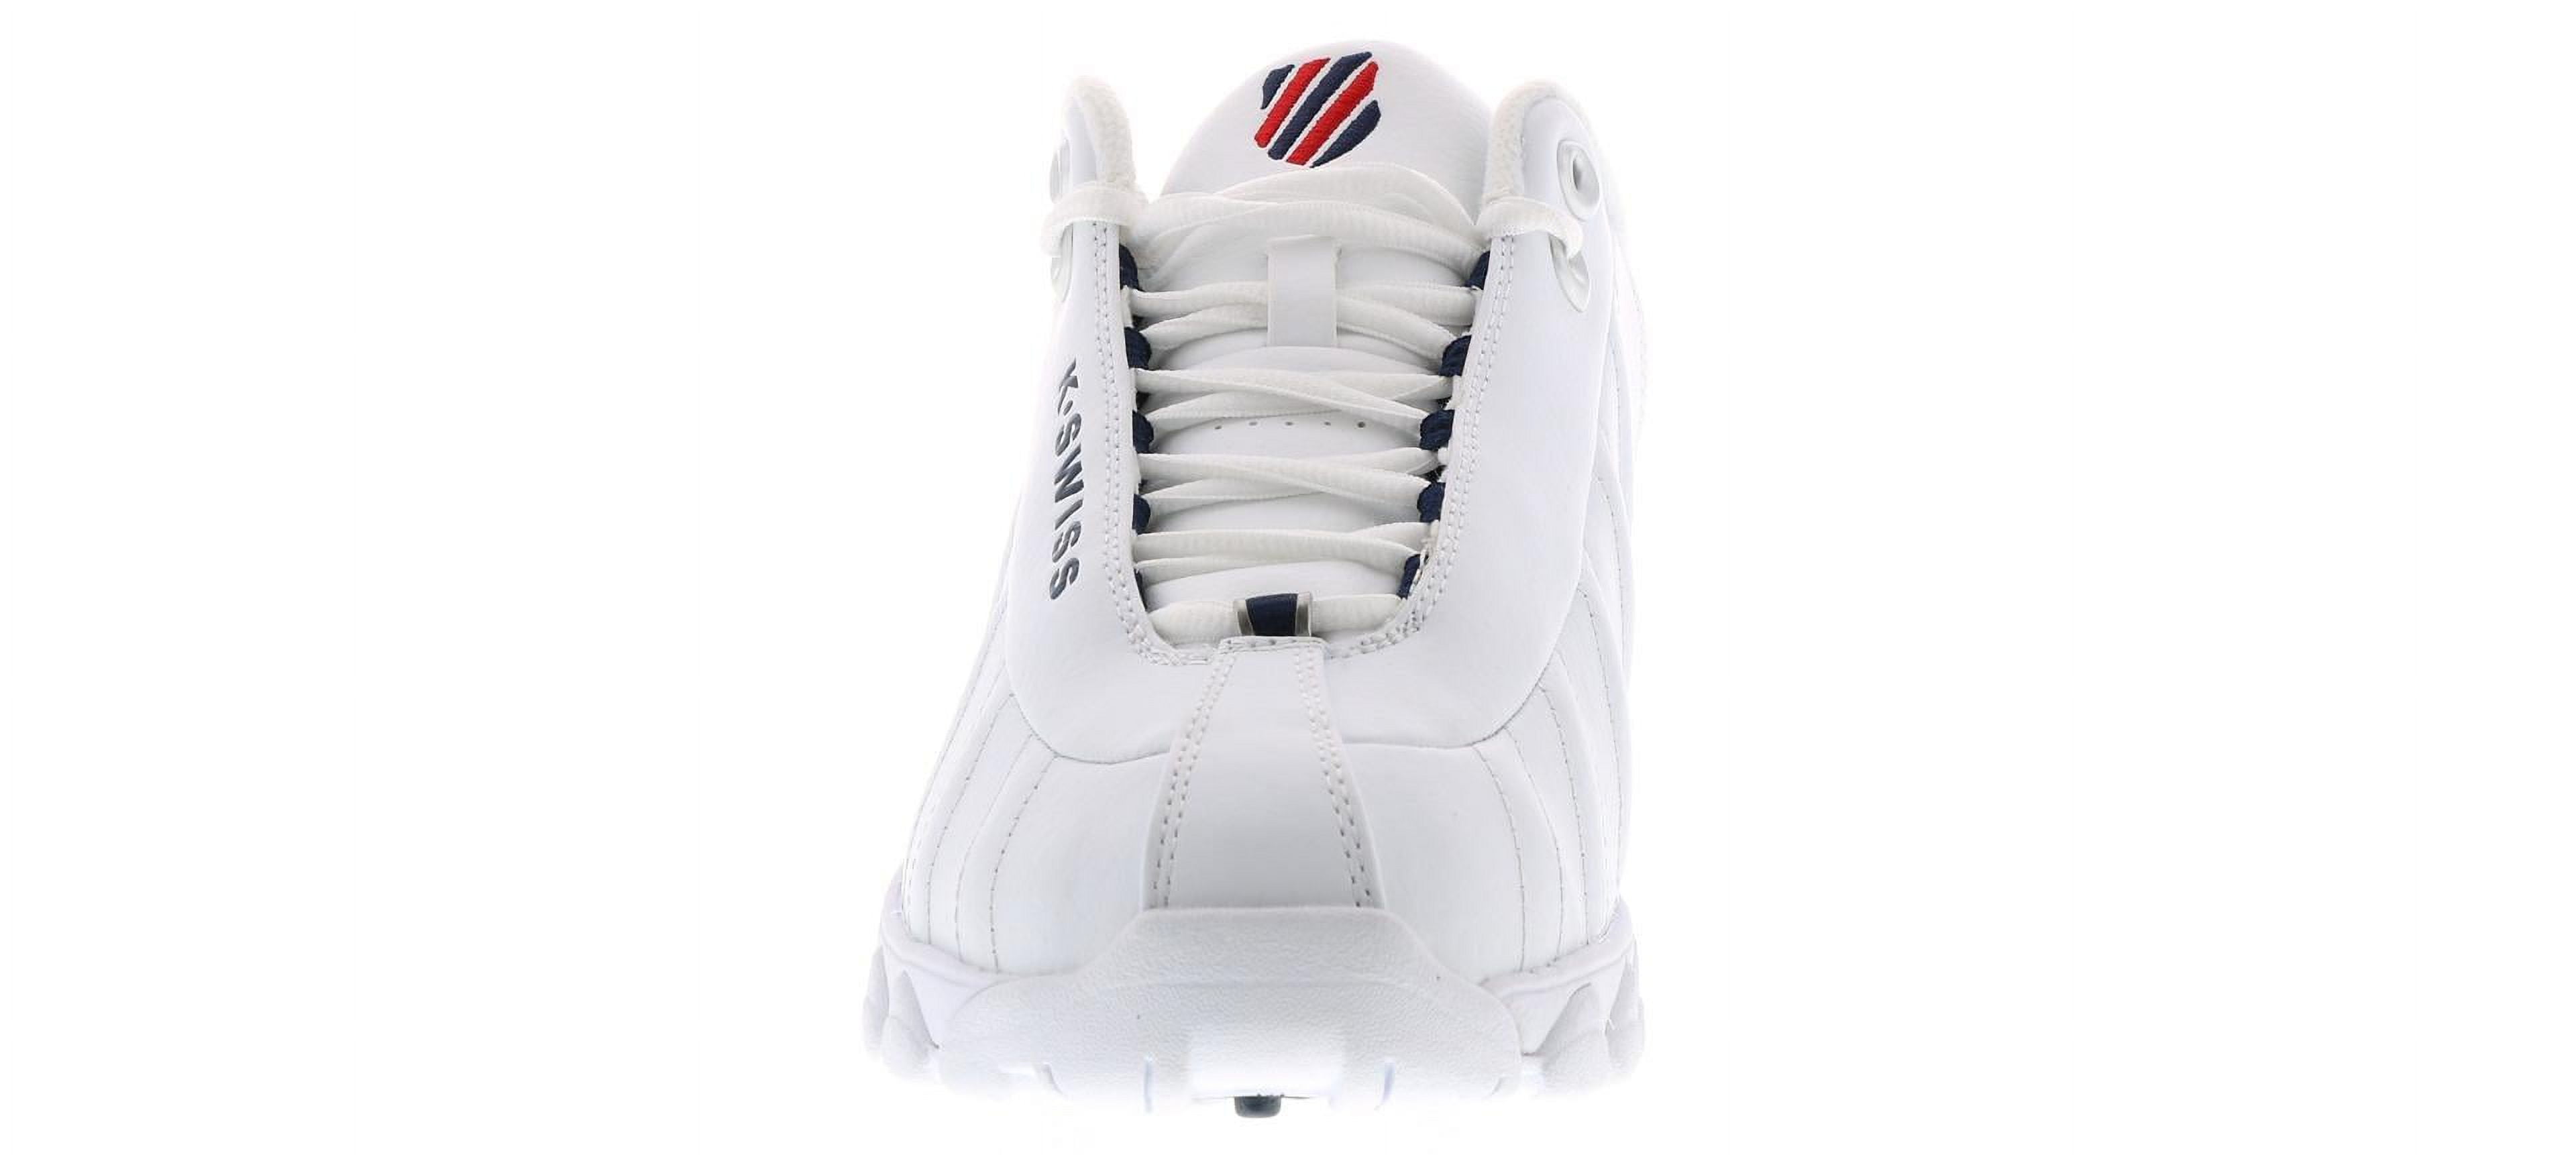 K-Swiss Men's St-329 Fashion Sneaker, White/Navy/Red, 14 XW US